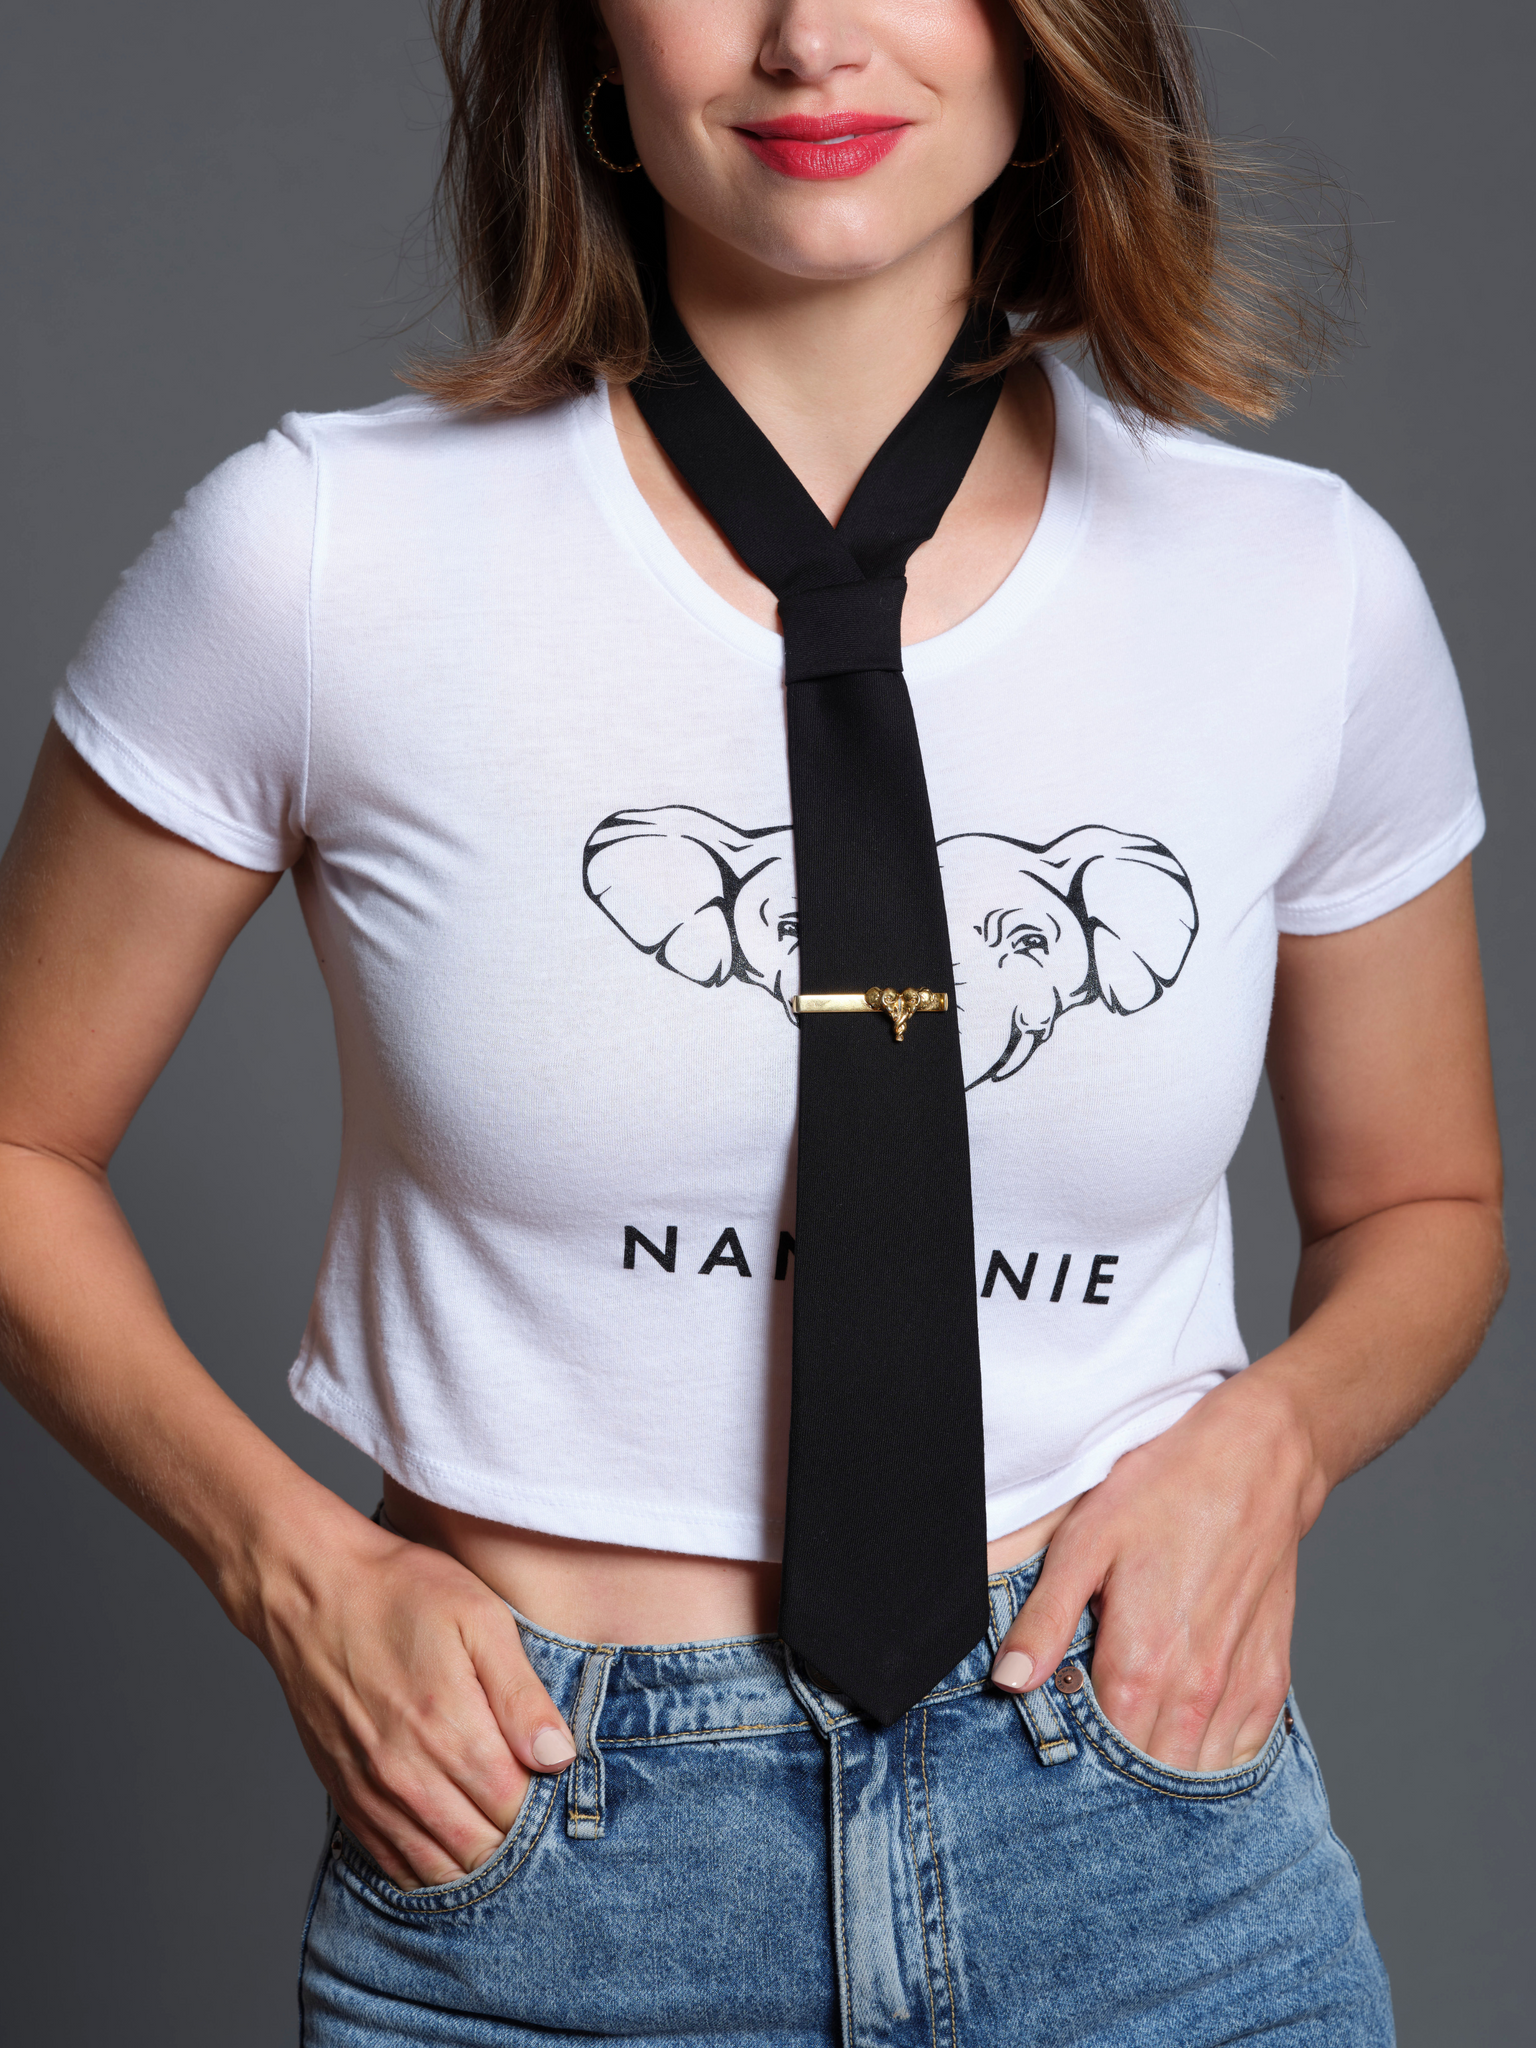 The NANDANIE Tie Bar